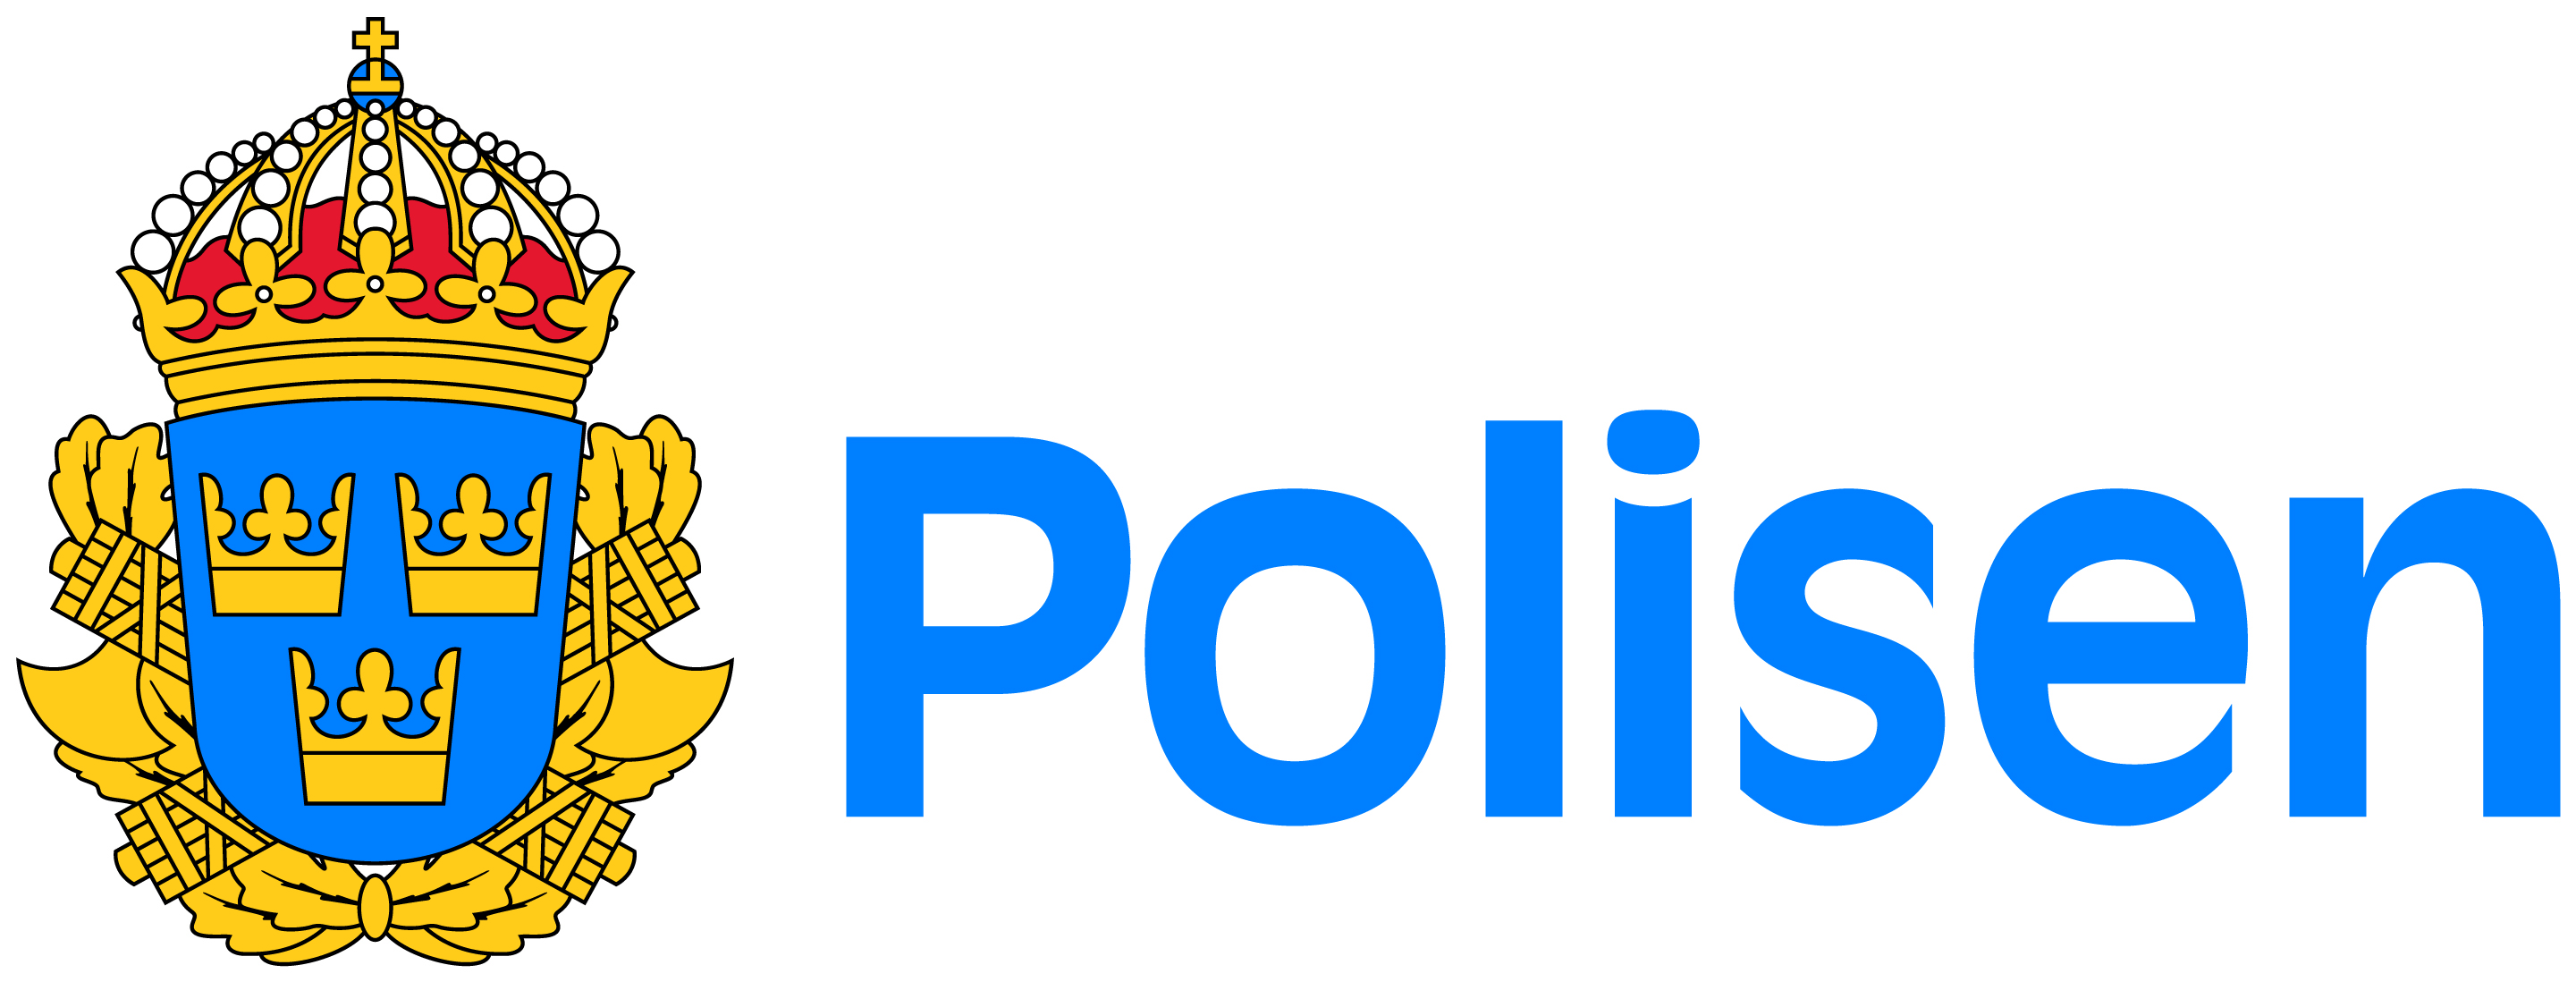 Swedish National Police Board logo